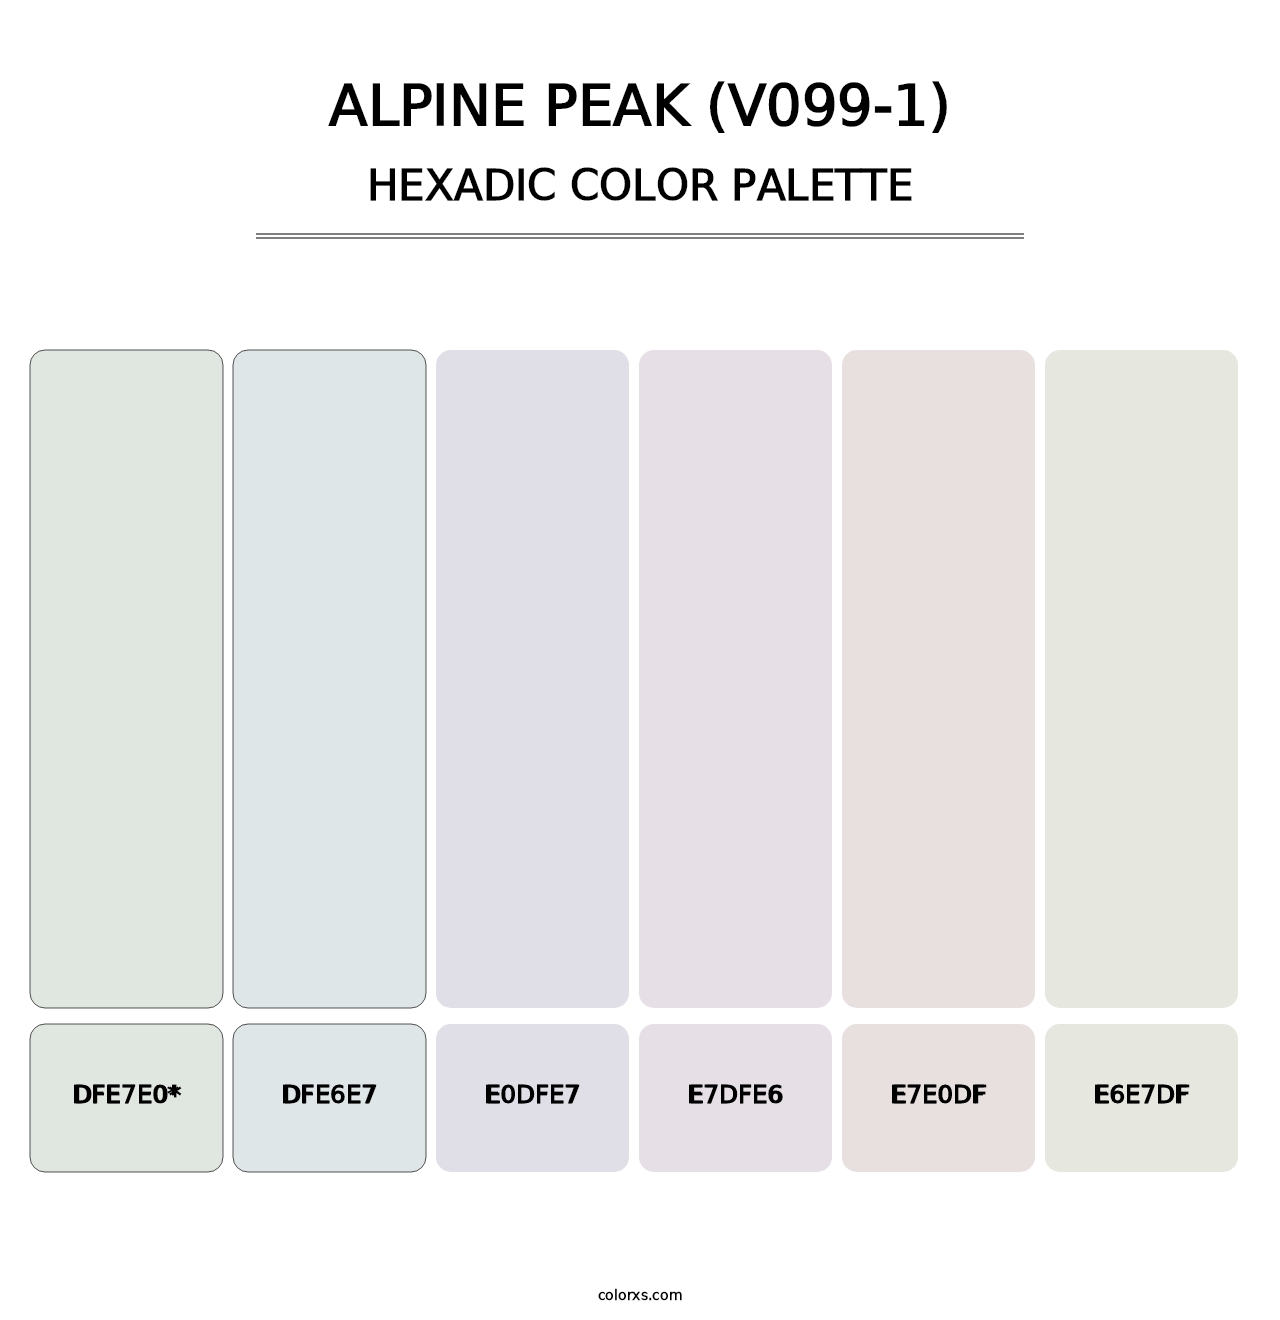 Alpine Peak (V099-1) - Hexadic Color Palette